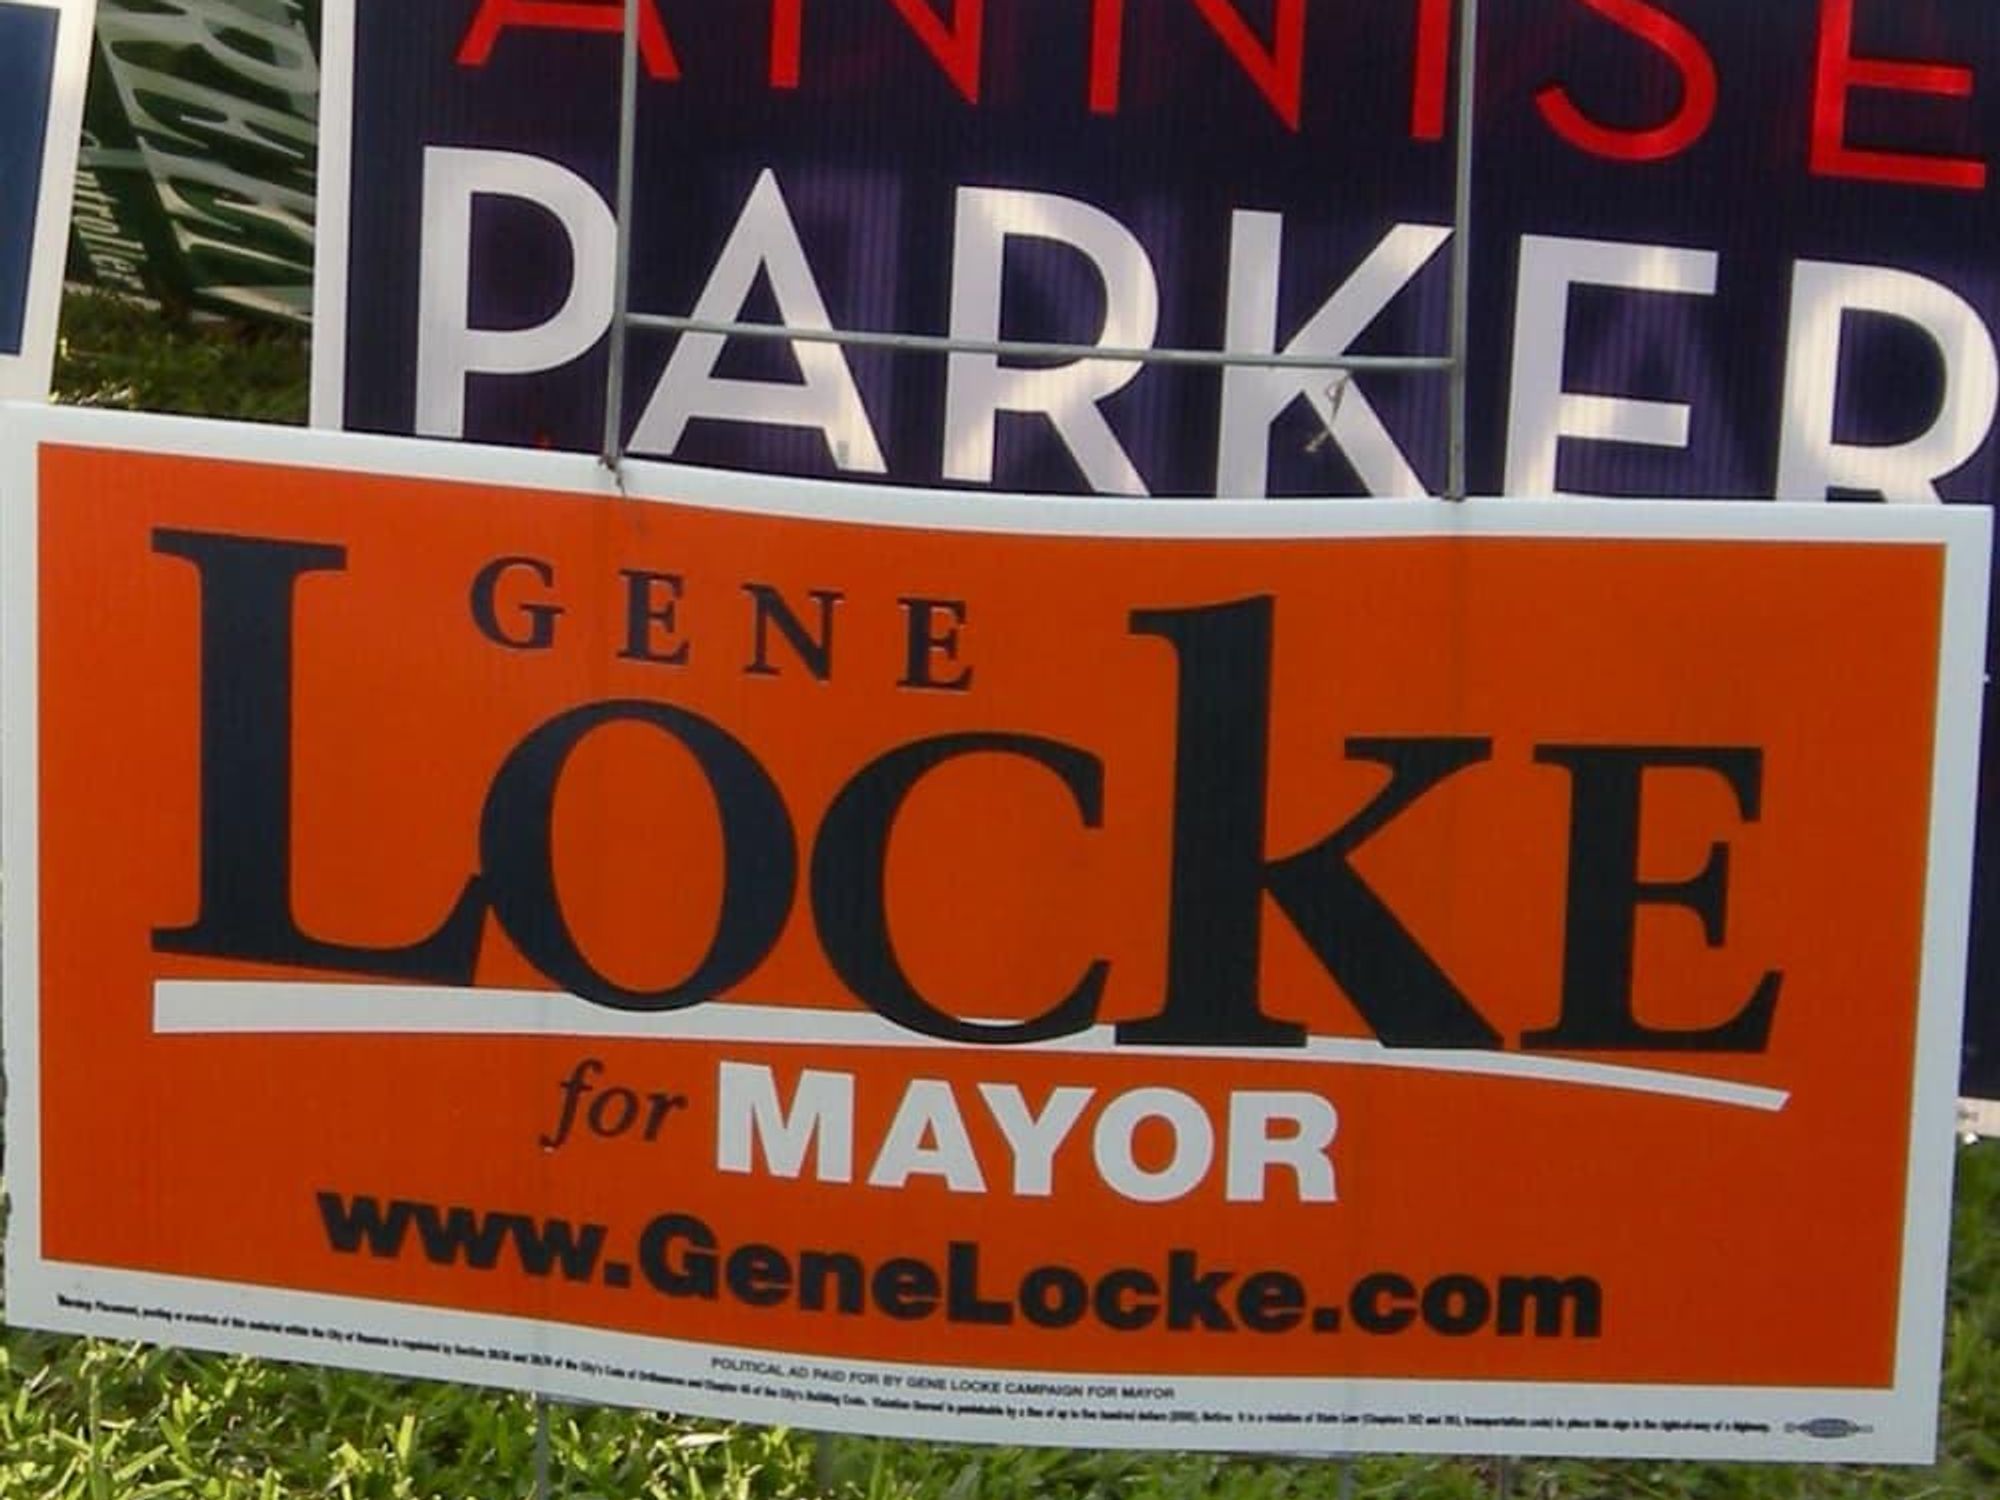 News_Mayoral Election 09_Parker_Gene Locke_signs_closeup